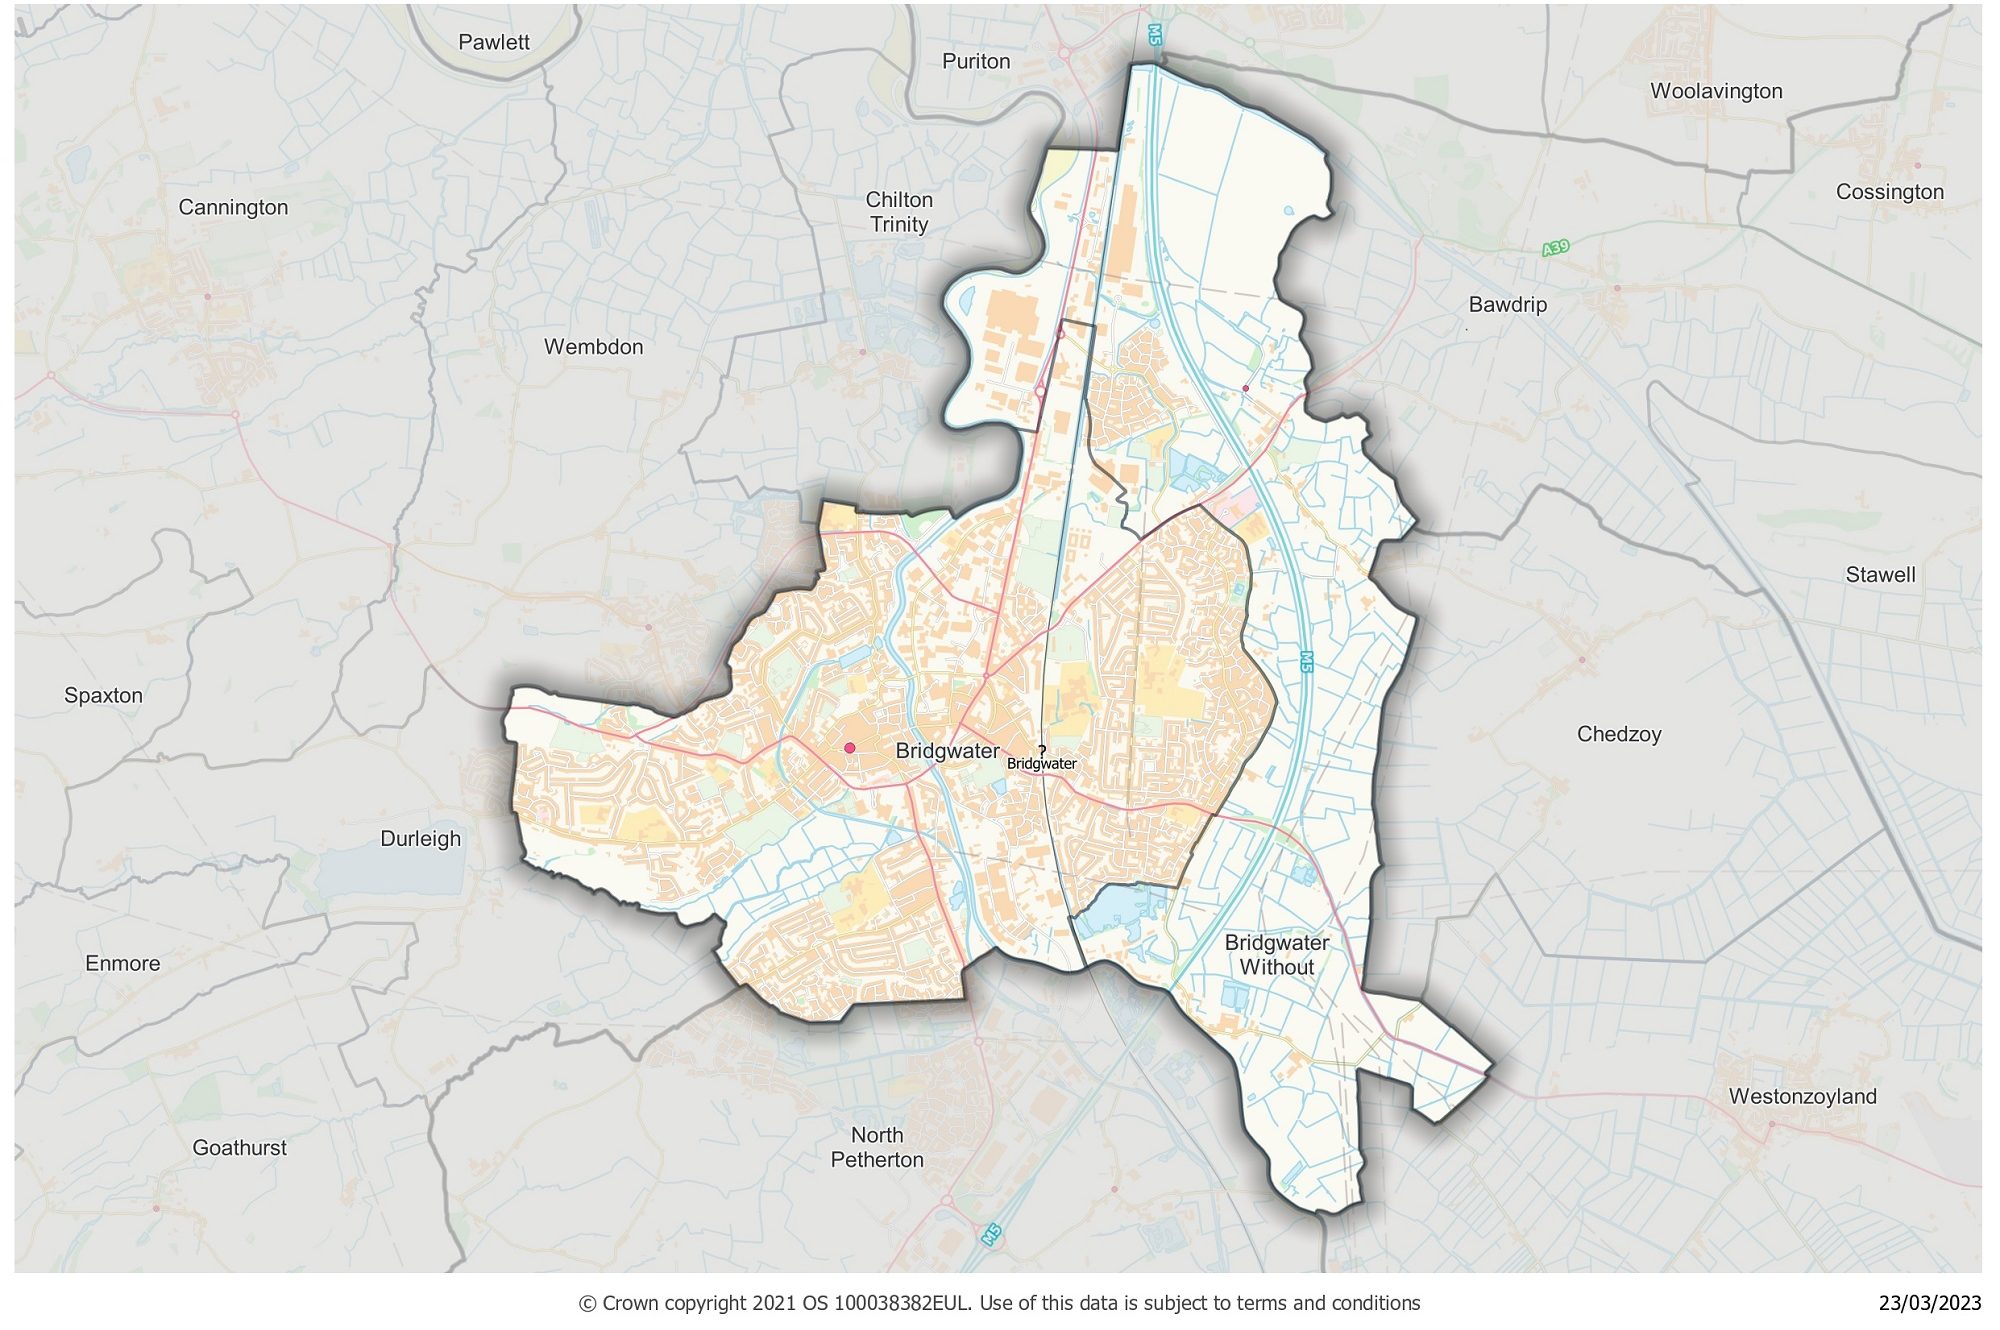 Bridgwater local community network area map